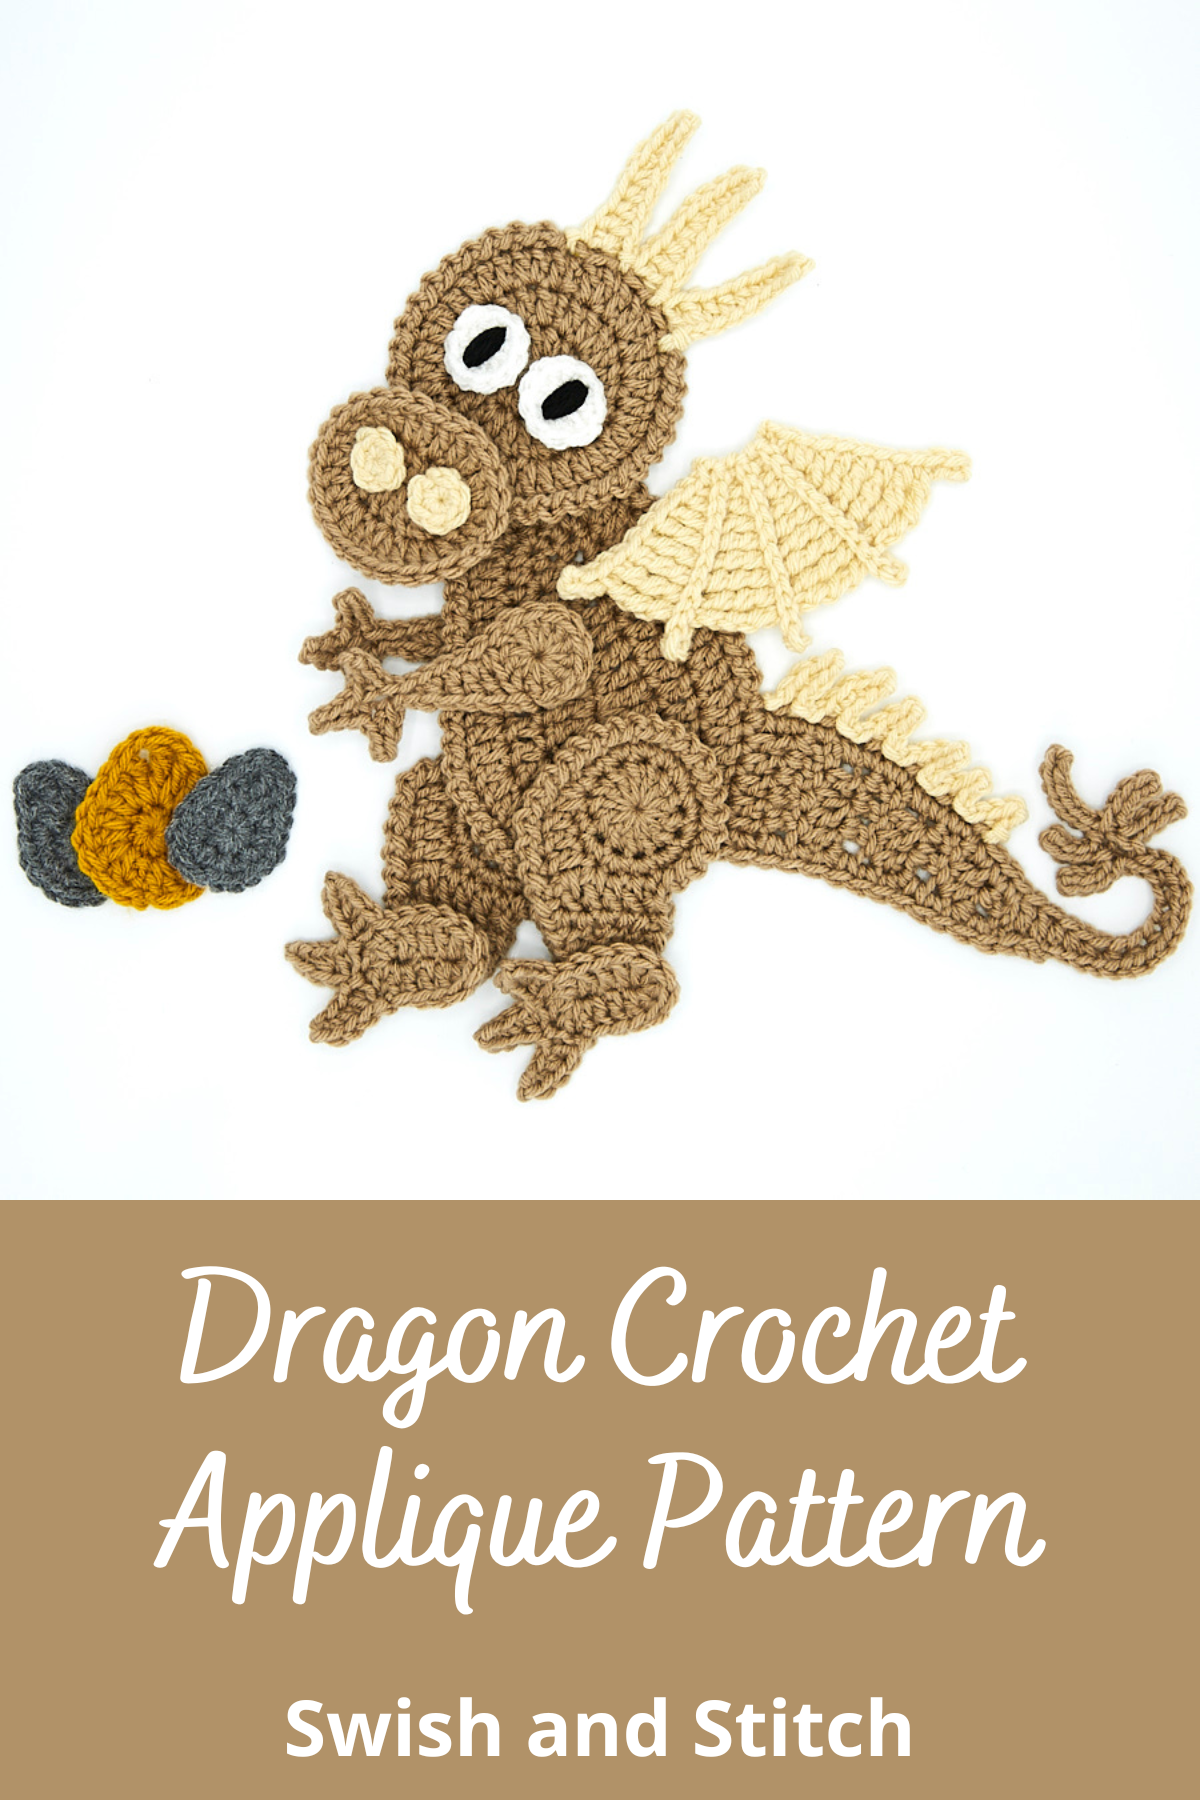 Harry Potter Hogwarts Crochet Applique Dragon - Pinterest Image